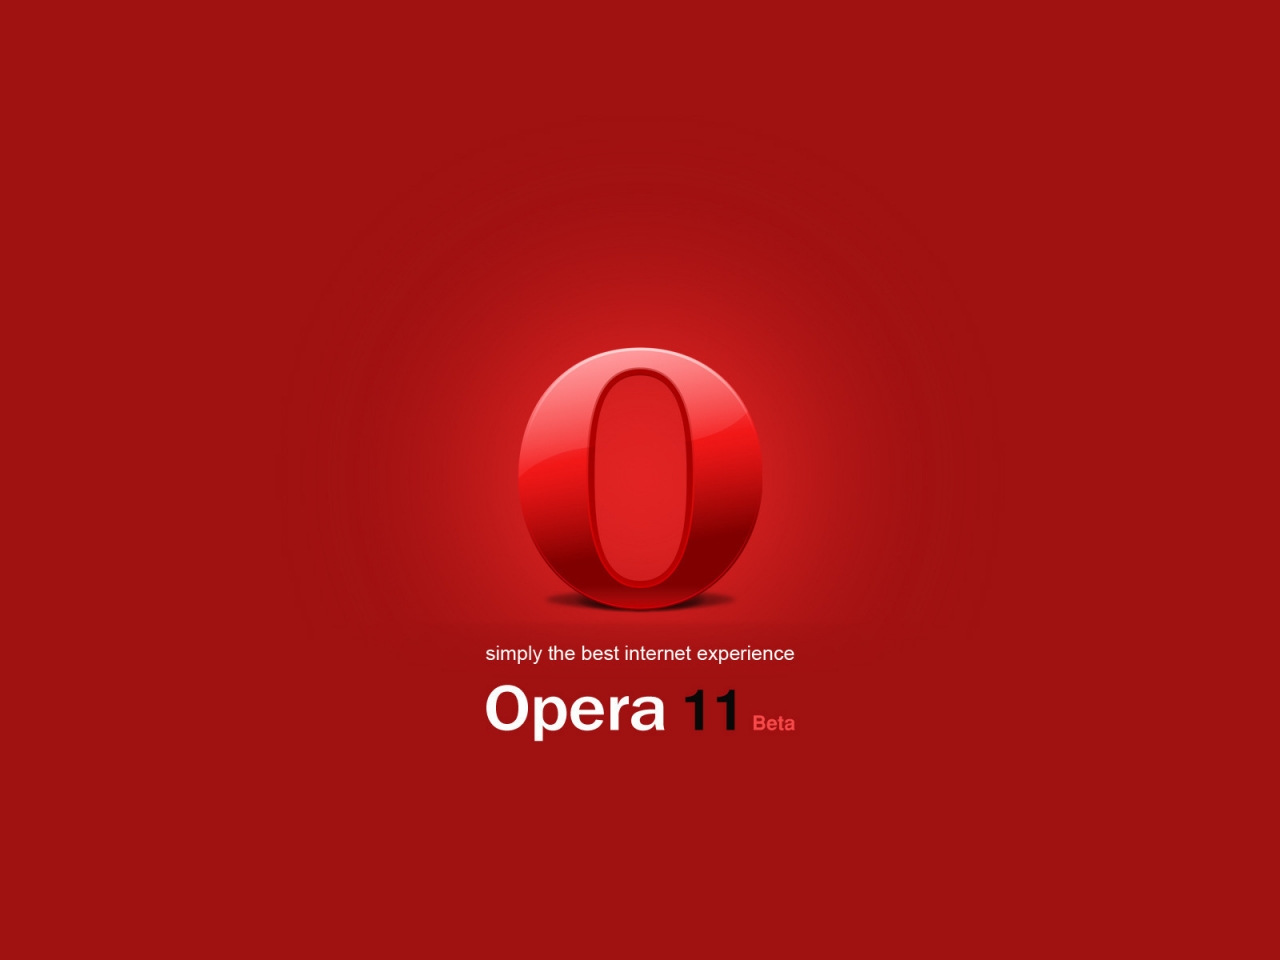 Opera 11 Beta for 1280 x 960 resolution